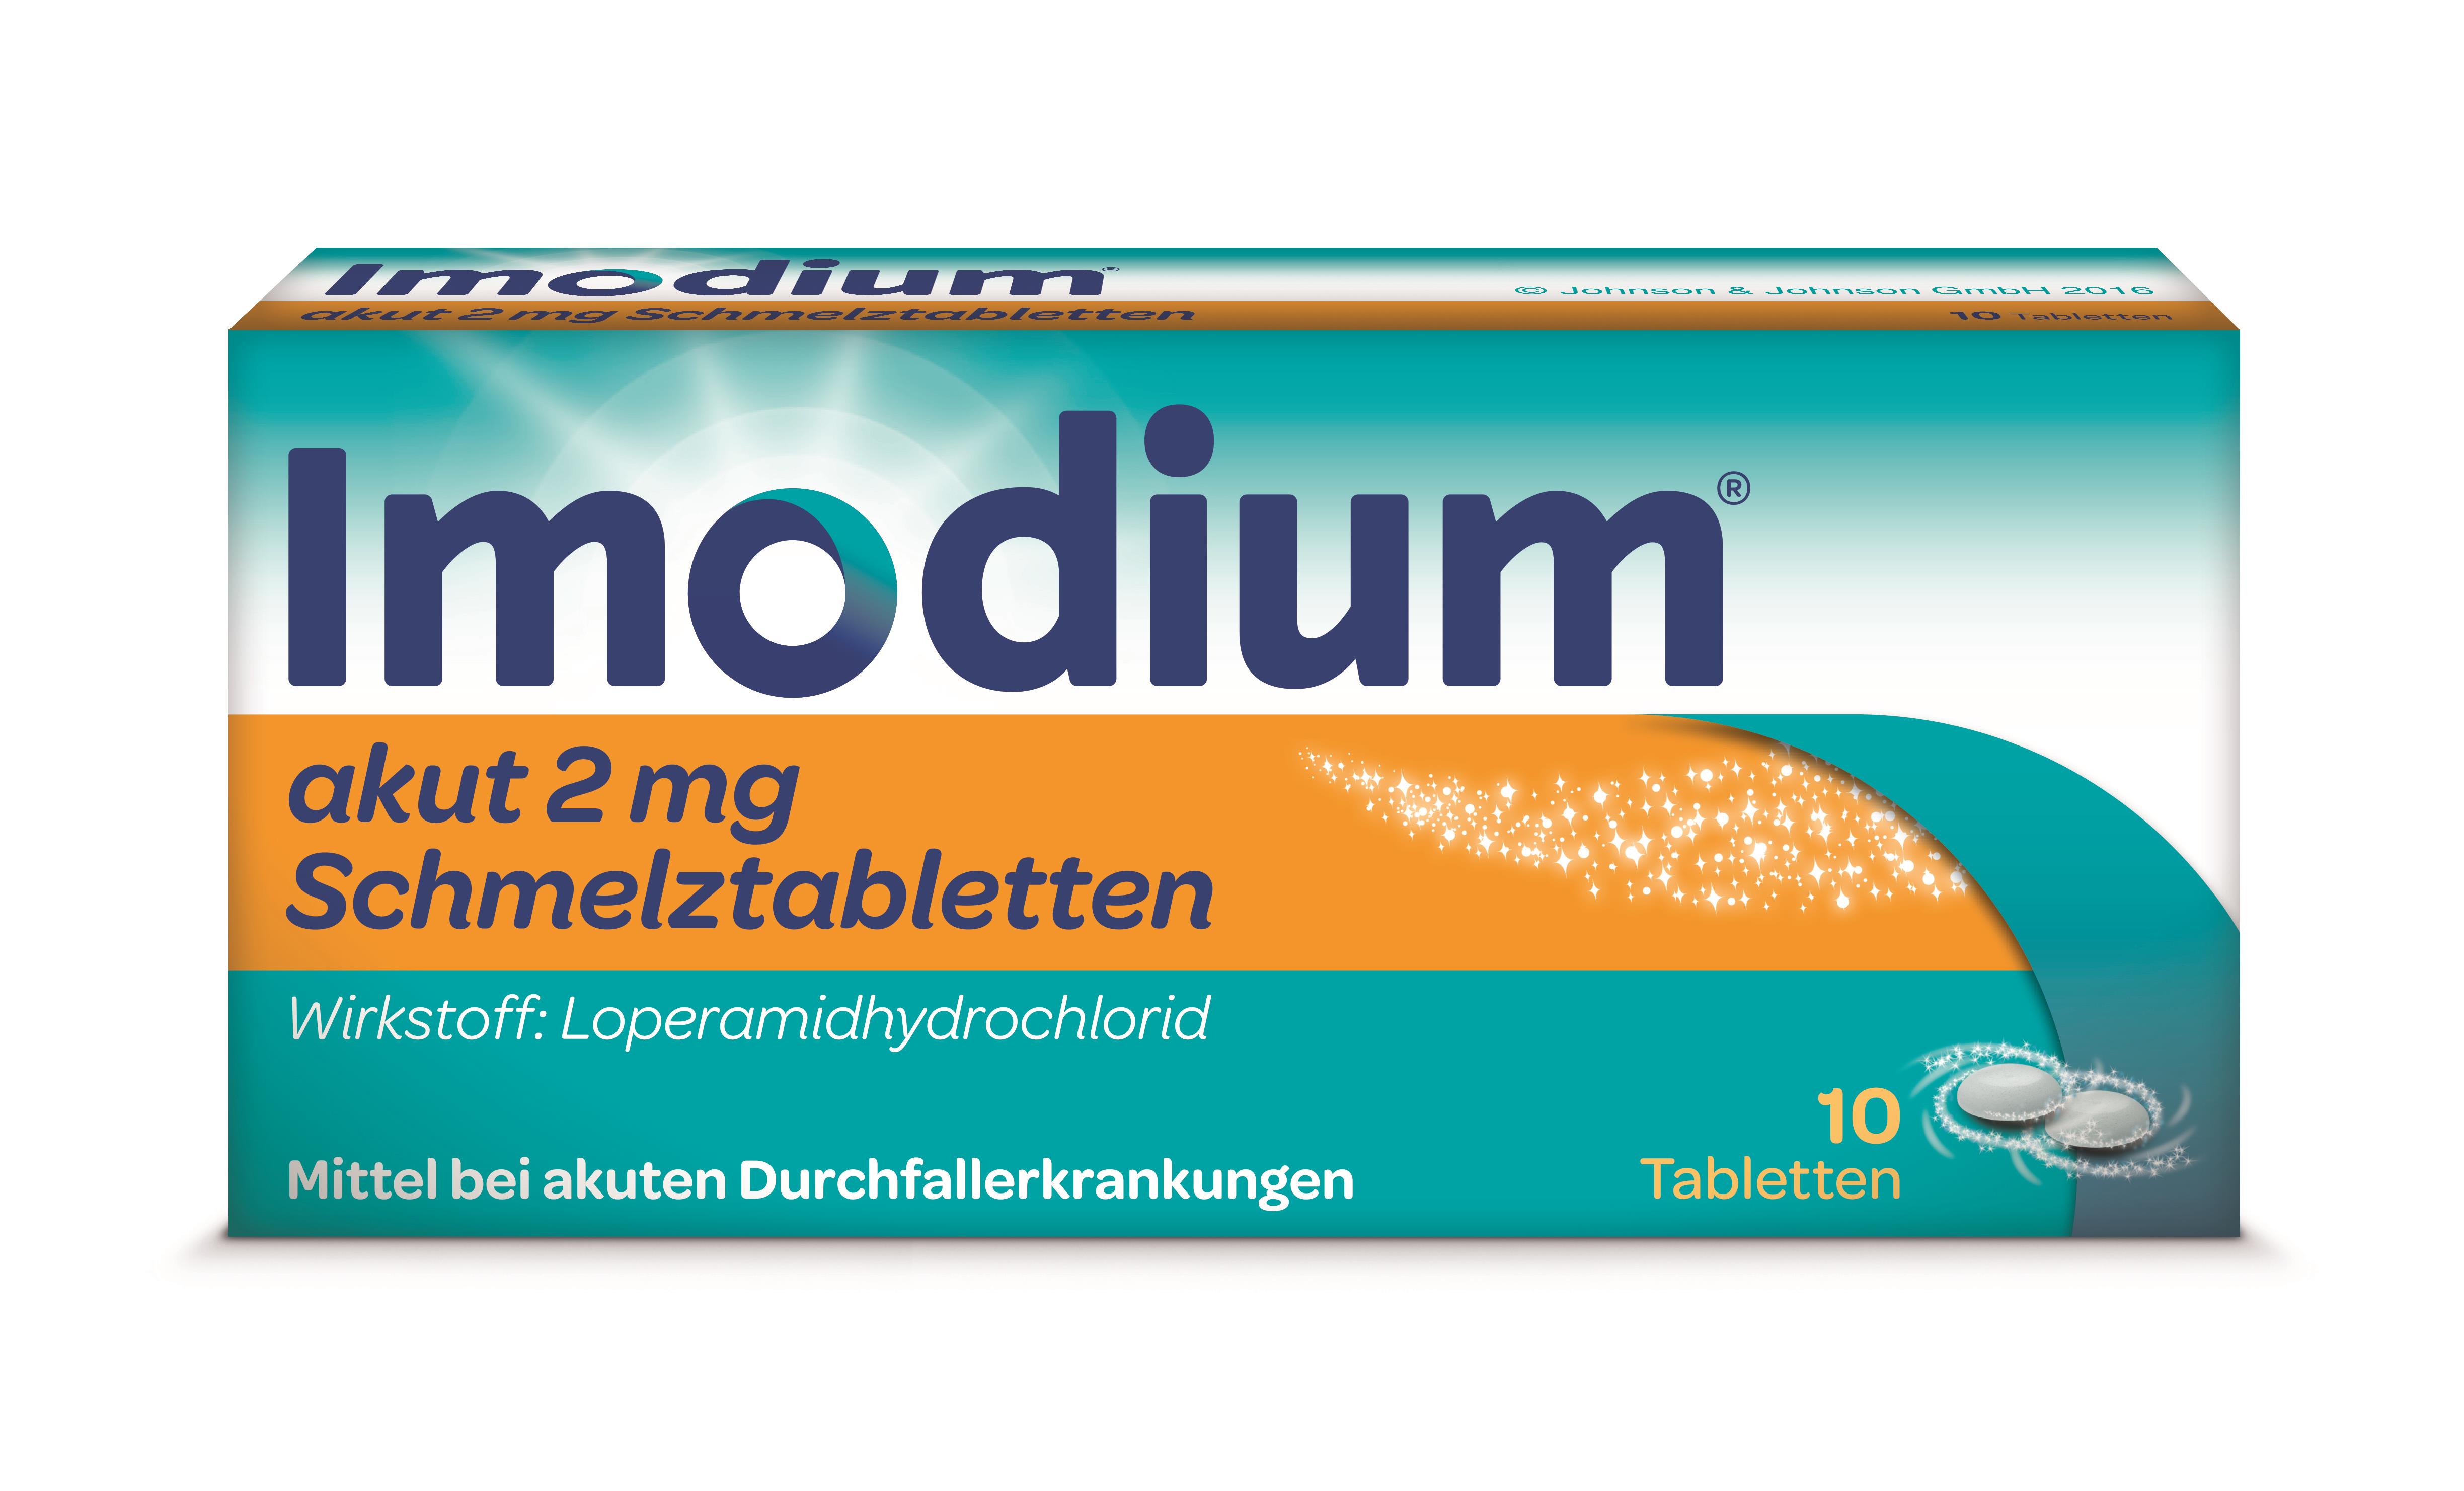 Imodium akut 2 mg - Schmelztabletten